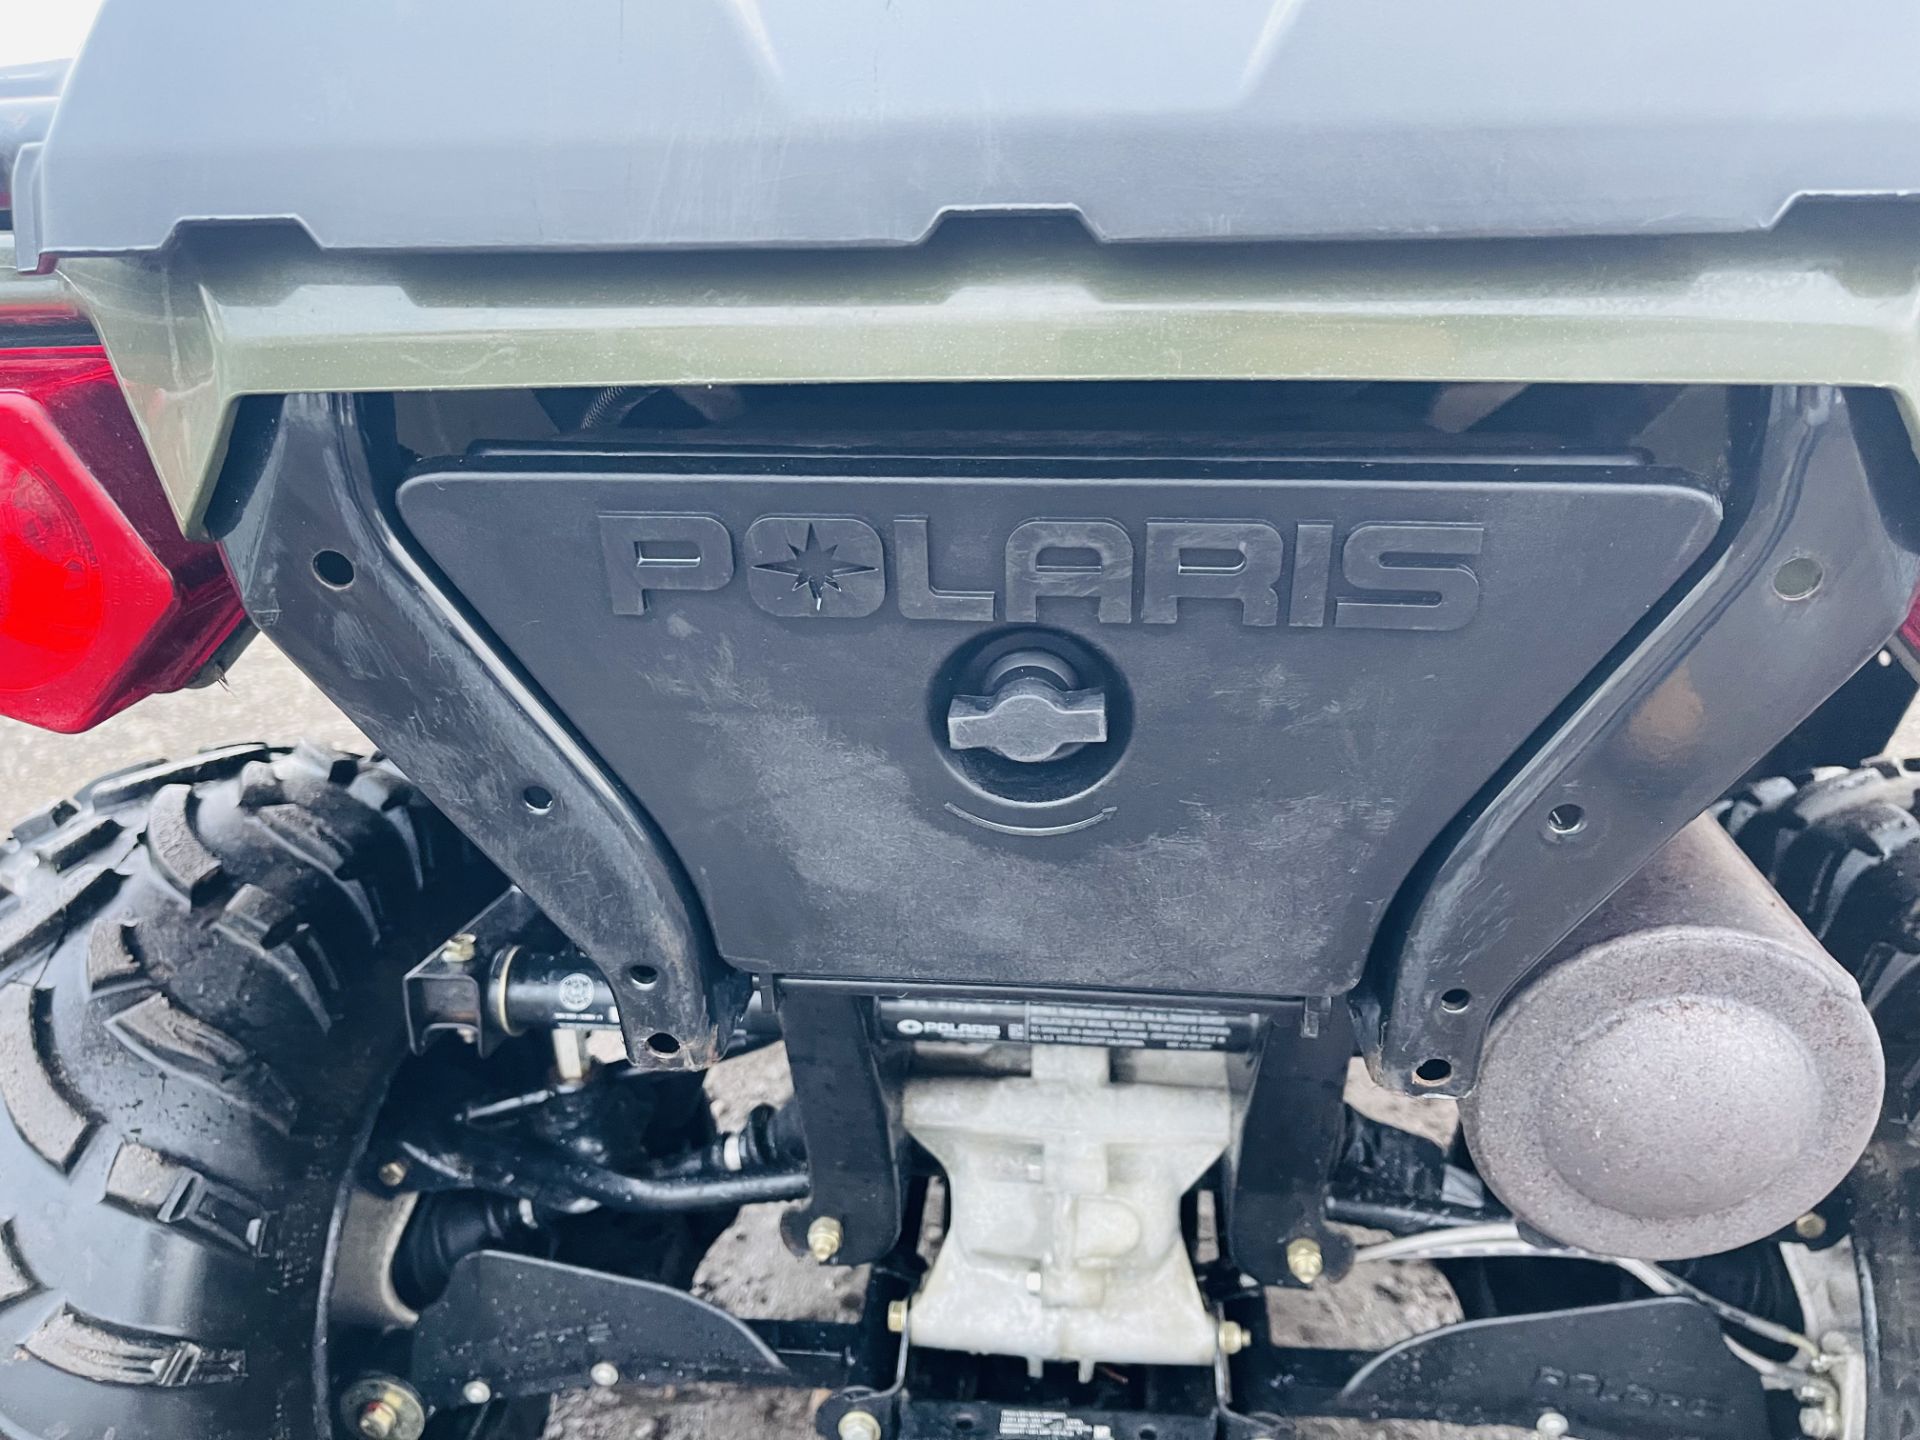 Polaris Sportsman 450 H.O EFI '2020 Year' 4WD - ATV QuadBike - Low Mileage - Image 15 of 30